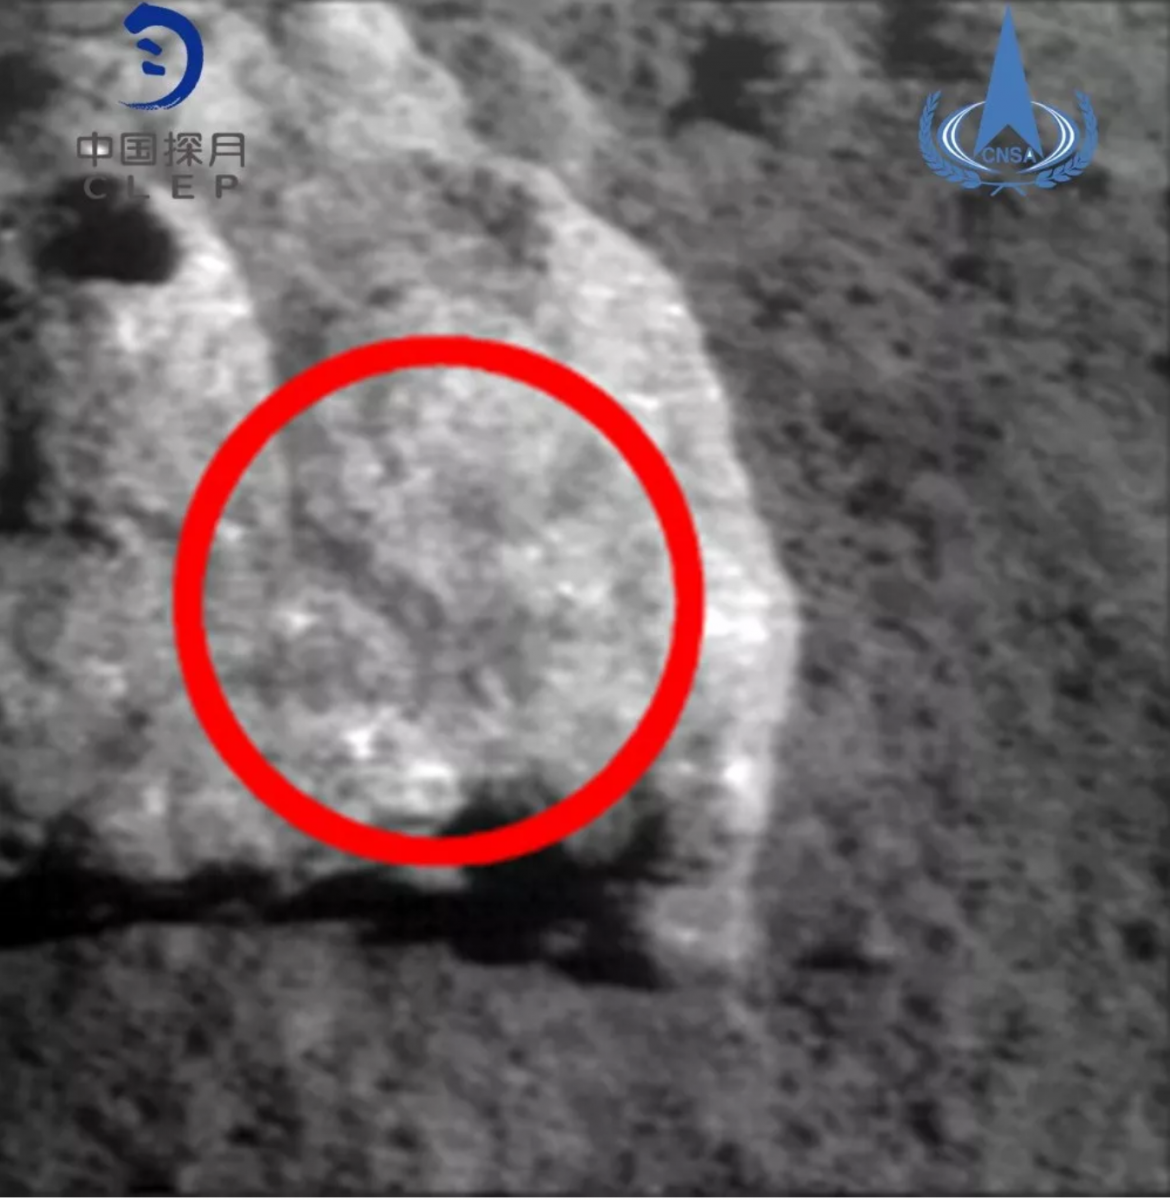 Луноход «Юйту-2» отправил на Землю снимки, подтверждающие факт поездки. Фото: planetary.org